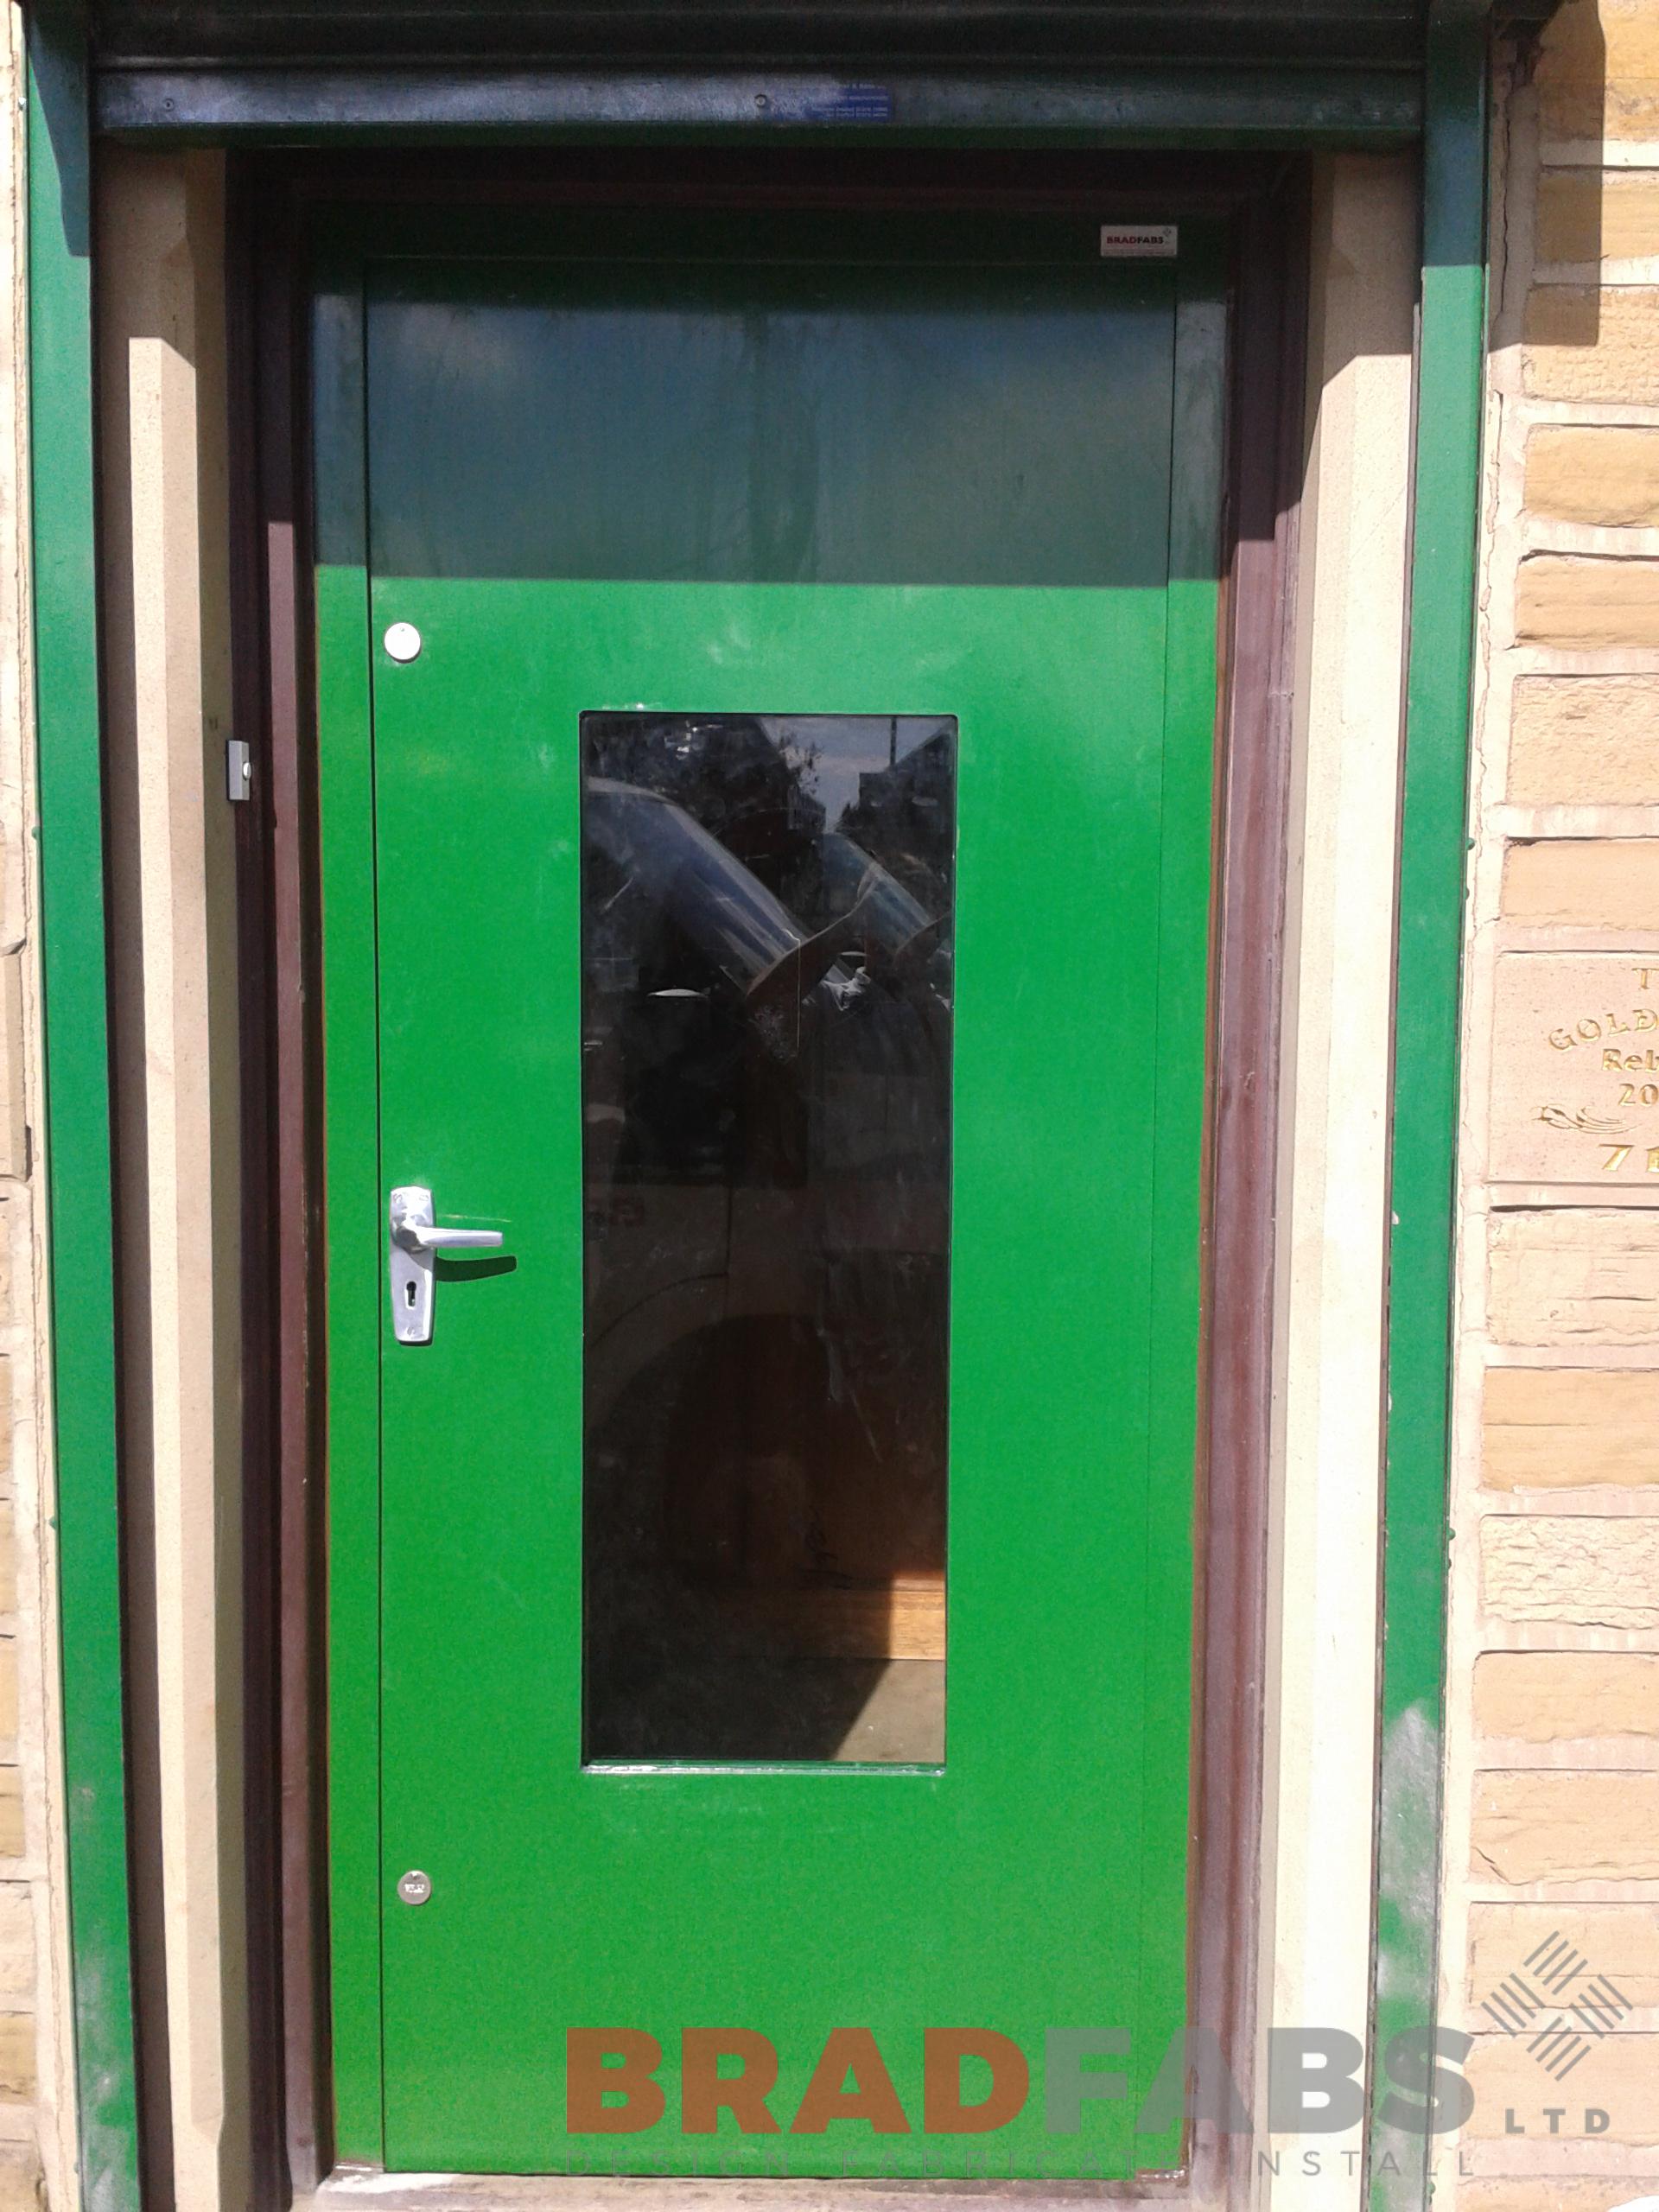 High specification steel security doors by Bradfabs